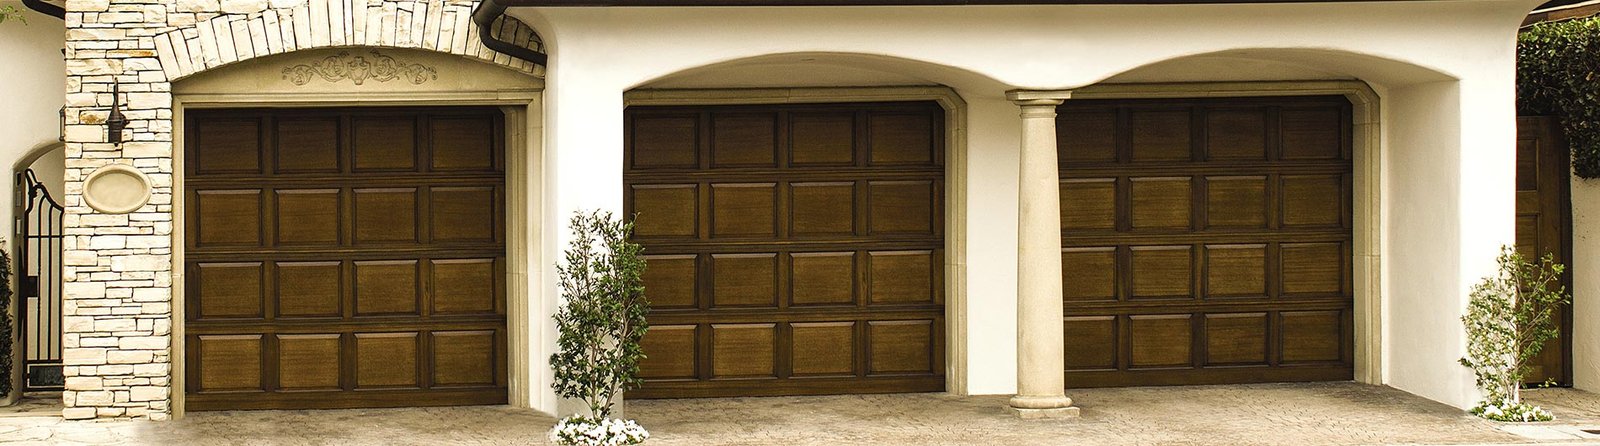 Raised Panel Wood Garage Doors